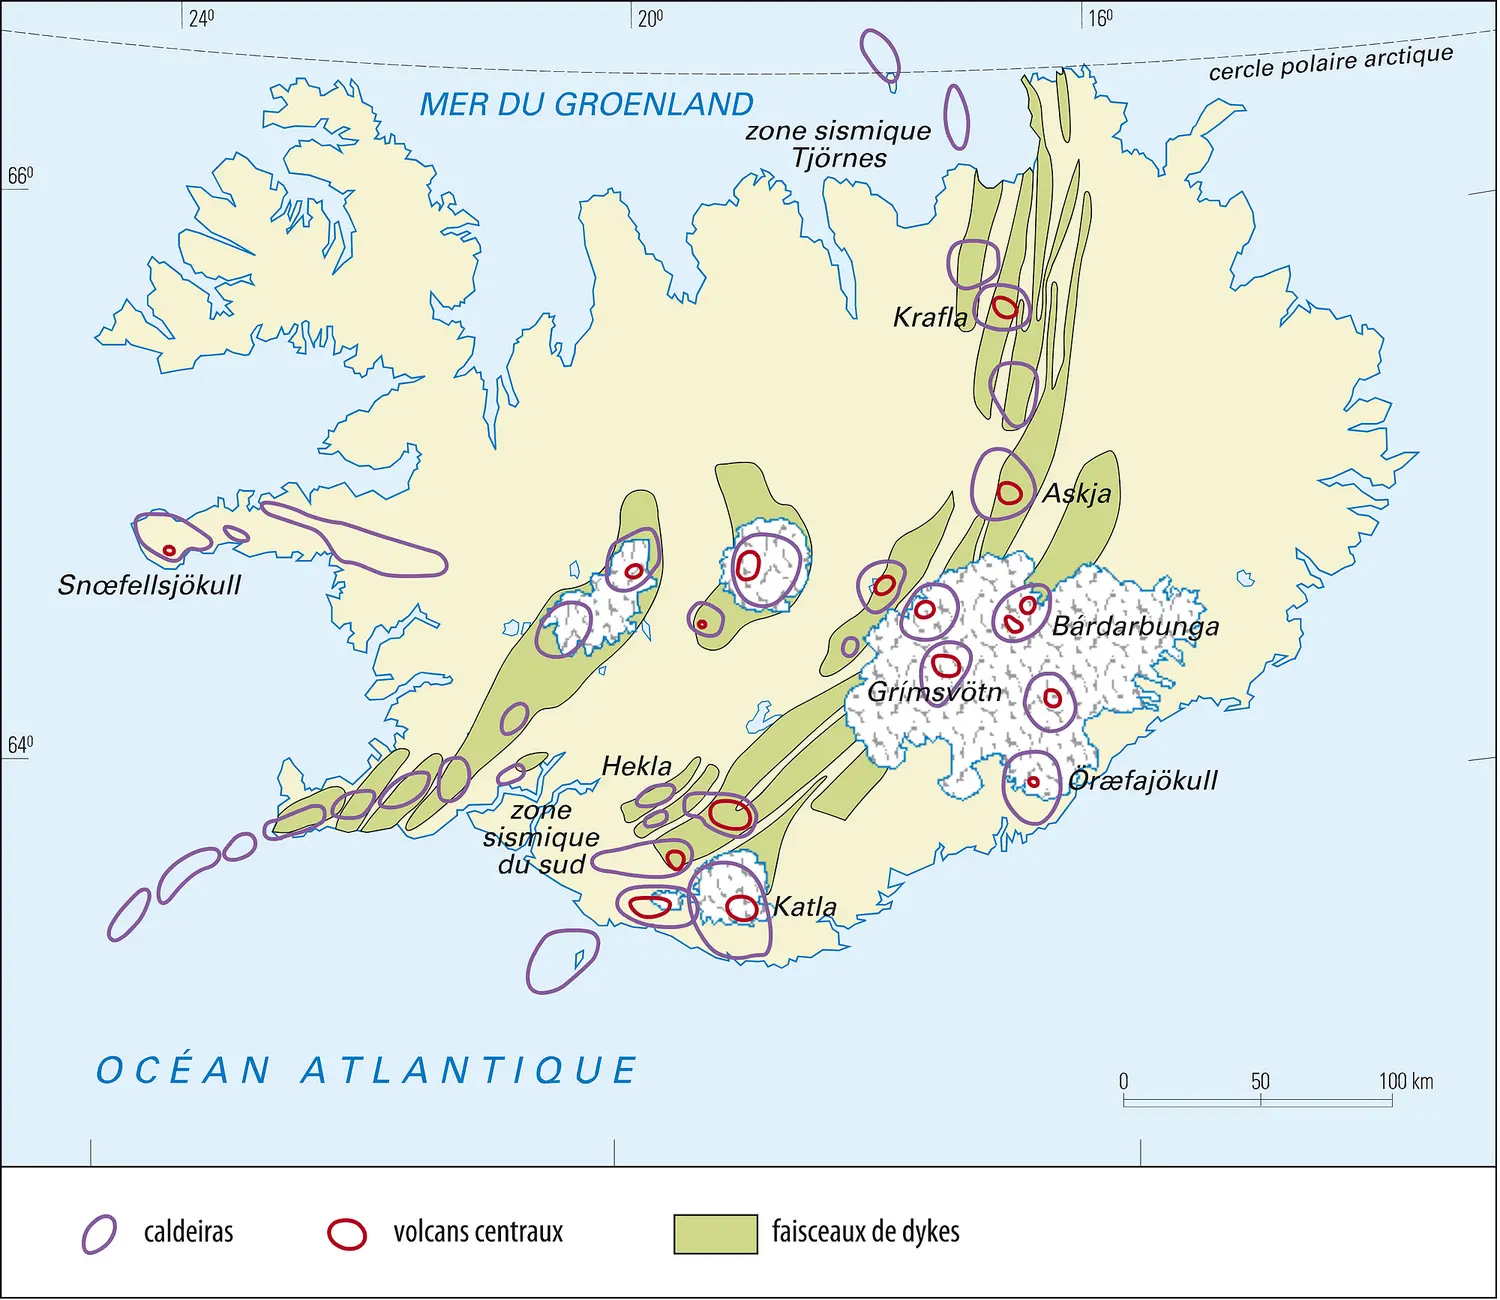 Centres volcaniques actifs en Islande